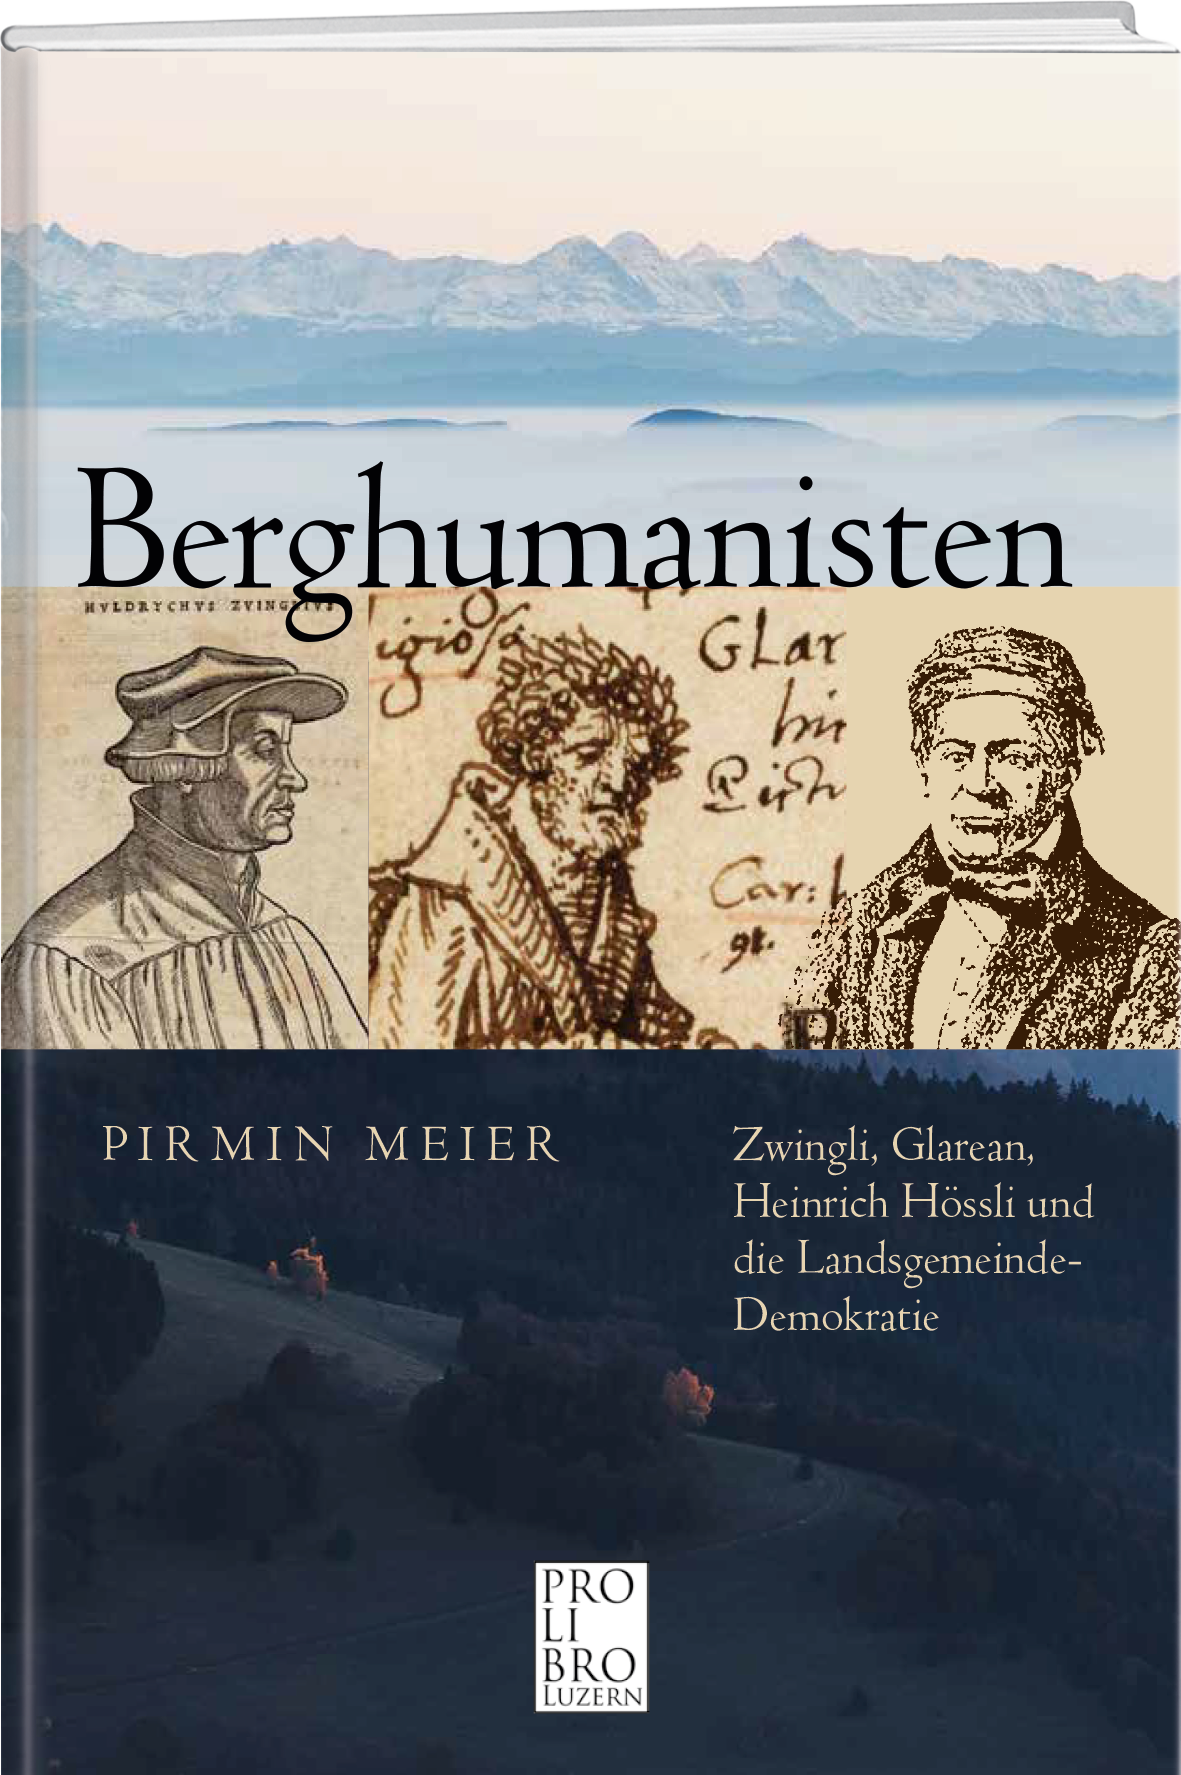 Meier Pirmin – Berghumanisten - prolibro.ch